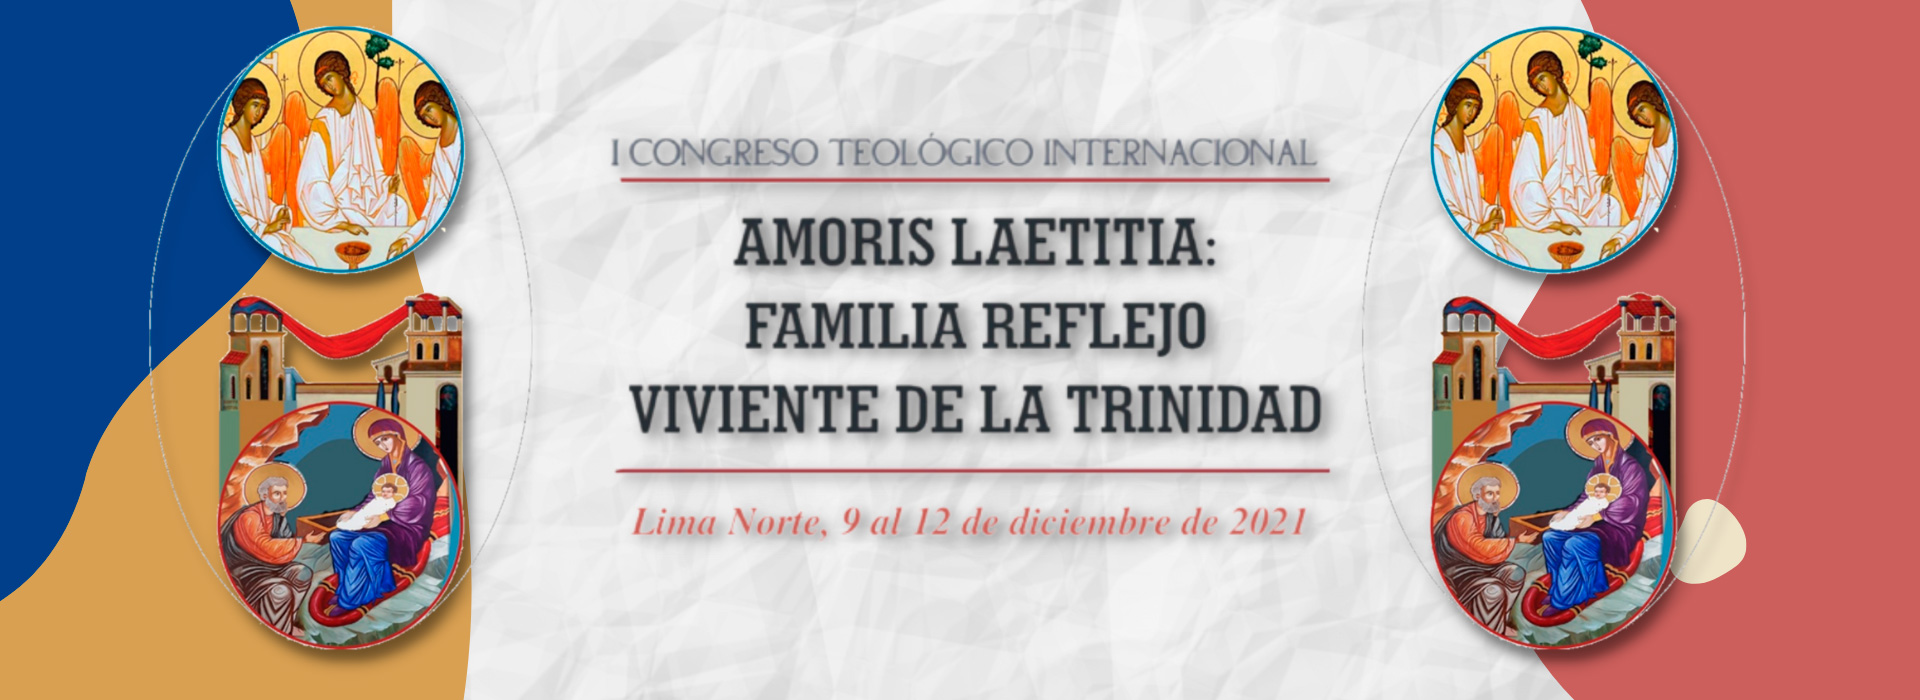 I Congreso Teológico Internacional